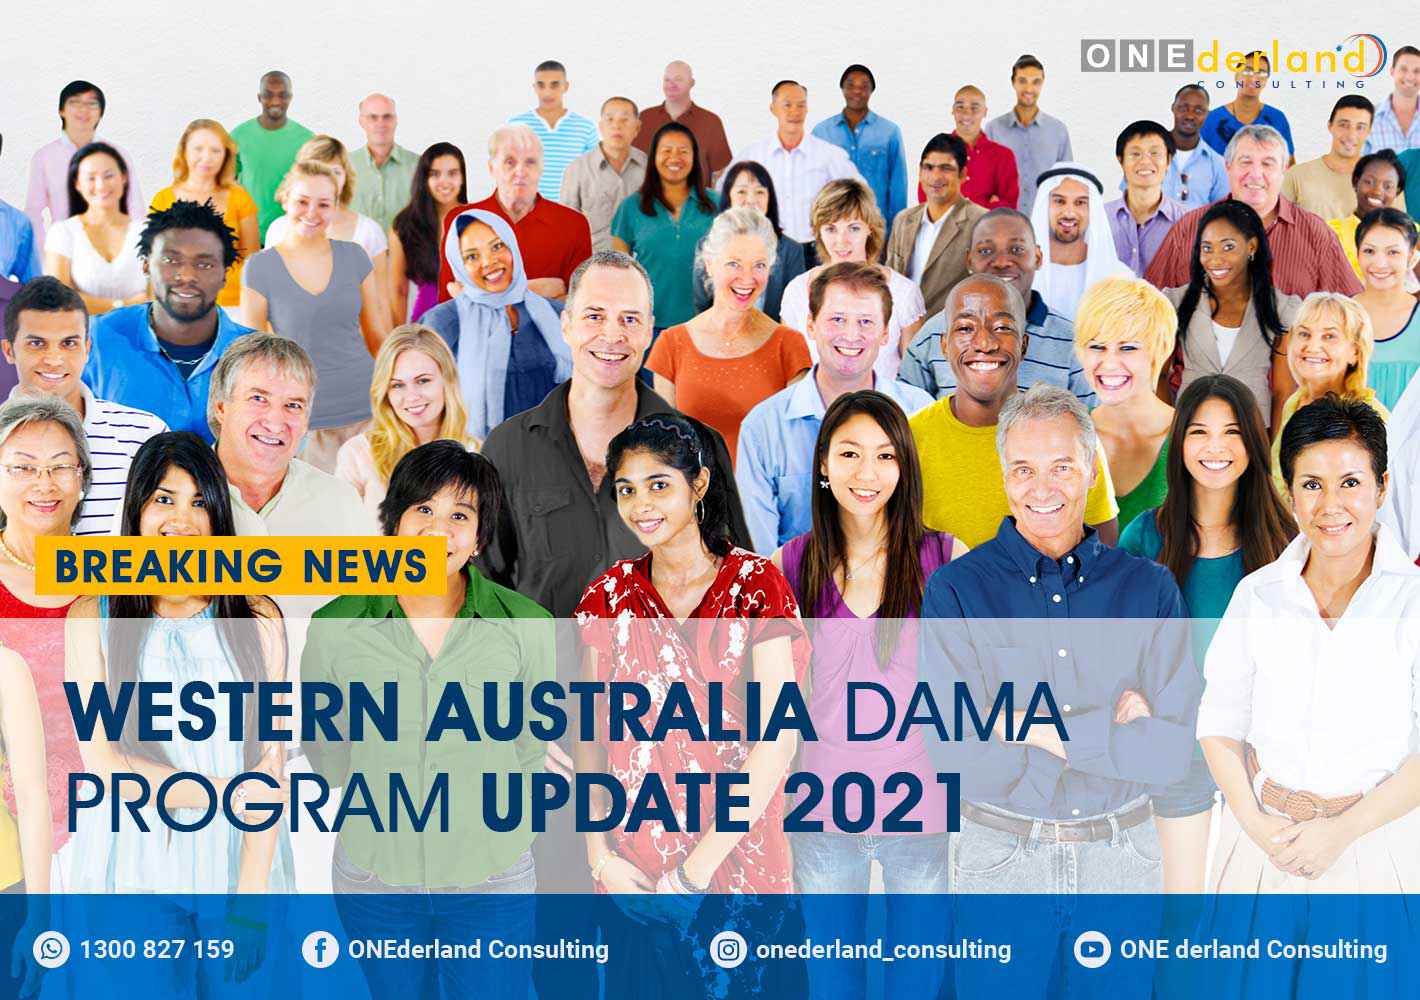 BREAKING NEWS! Western Australia DAMA Program Update 2021